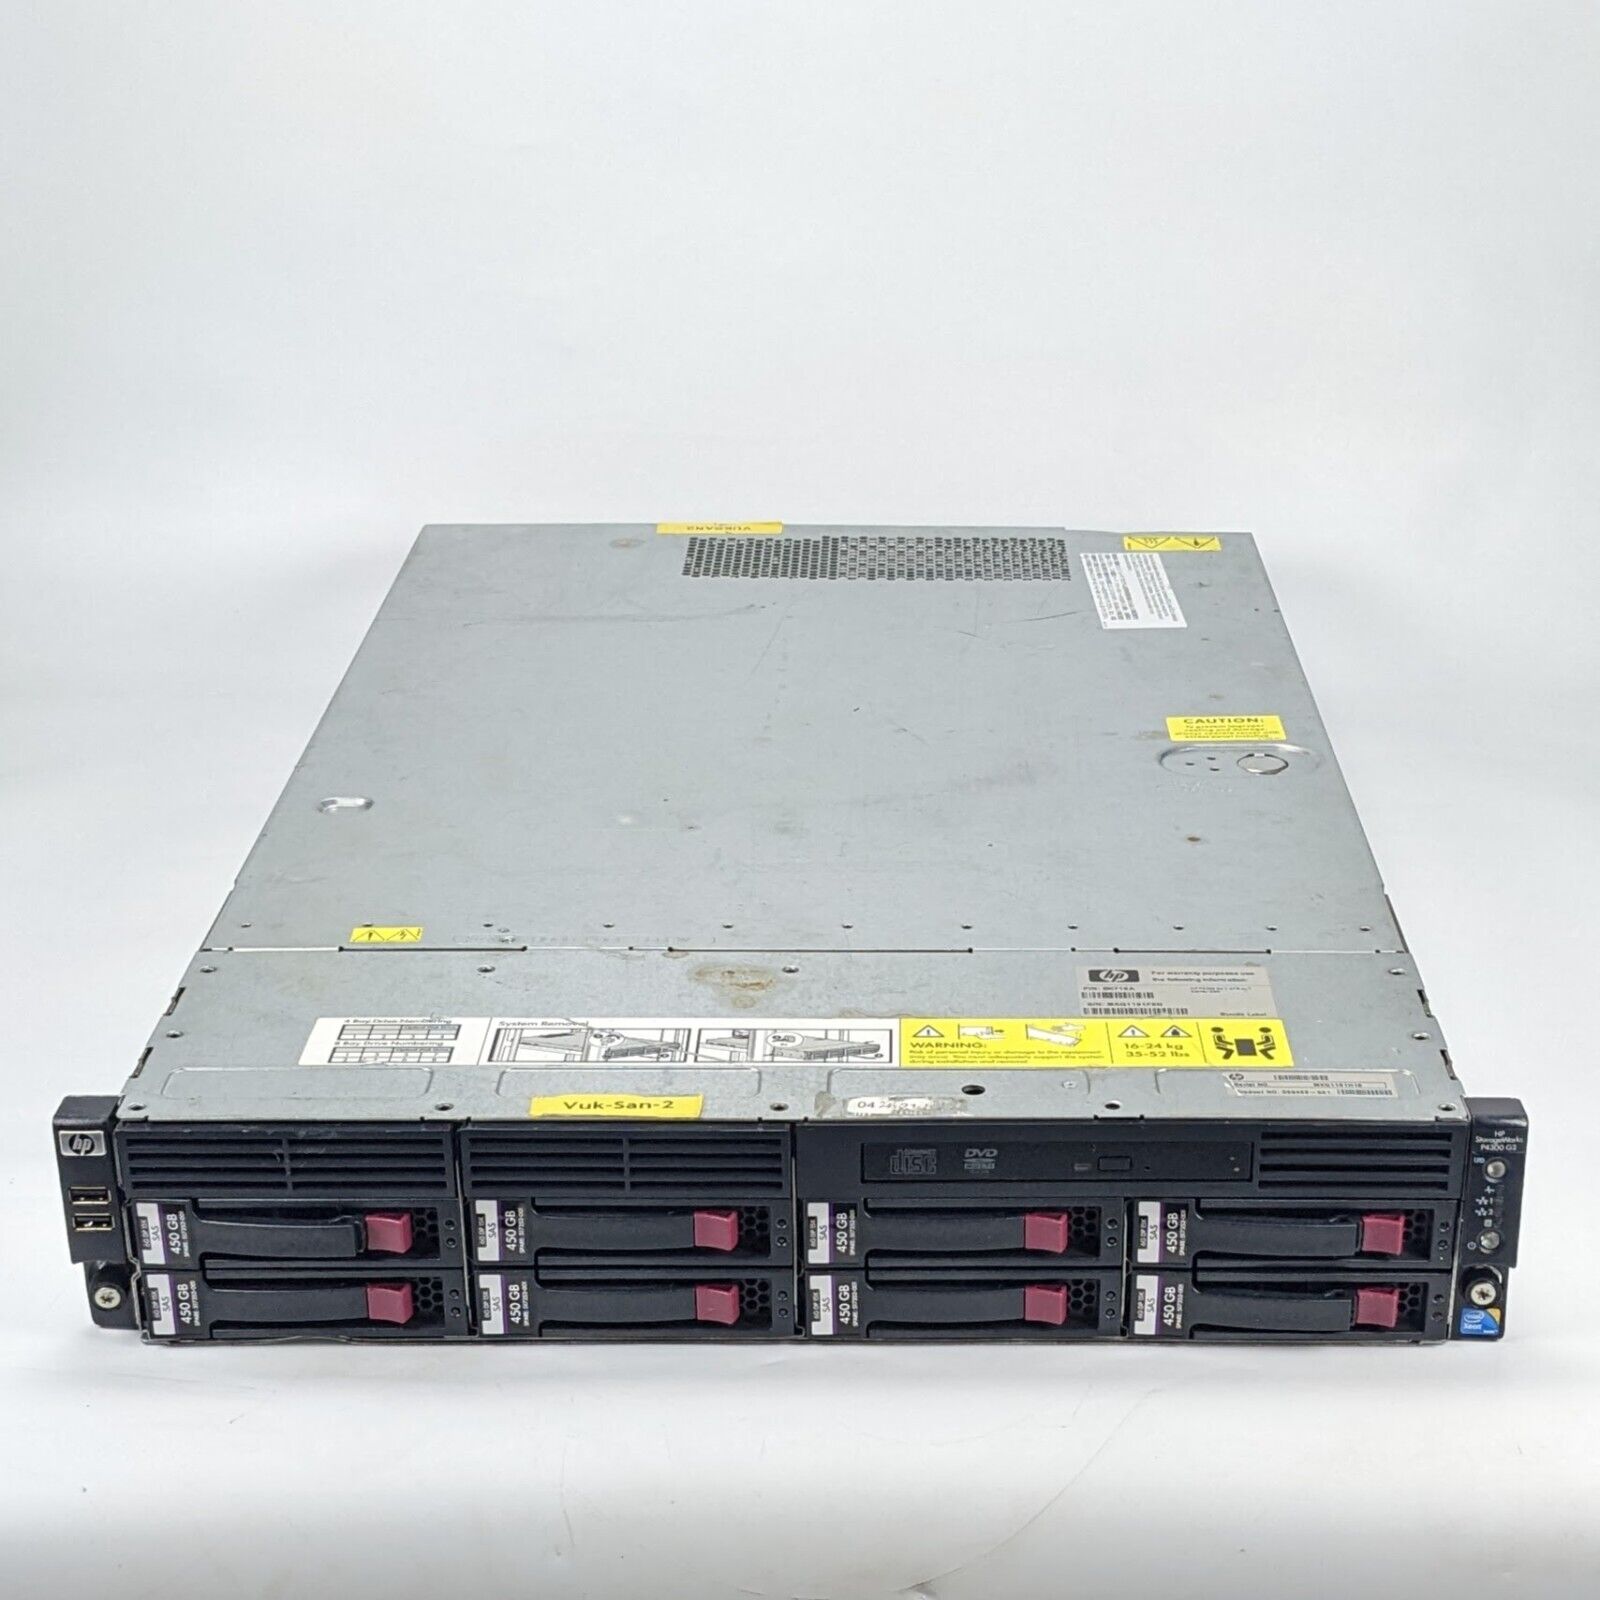 HP StorageWorks P4300 G2 Xeon E5520 2.27GHz 2GB 6x 450GB 15K SAS HDD - SEE DESC